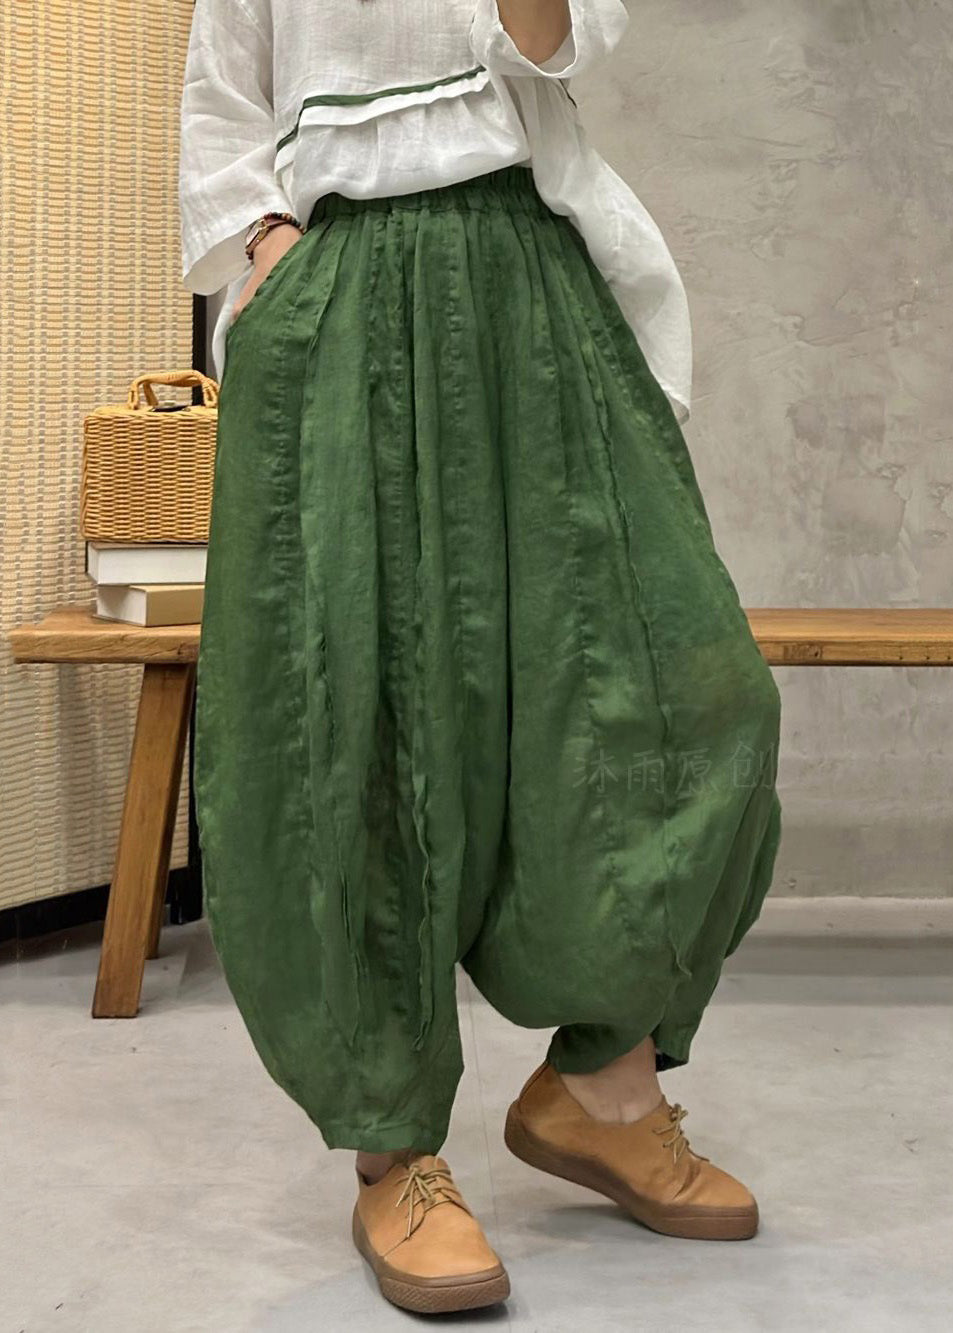 Green Solid Elastic Waist Thin Linen Crop Pants Pockets